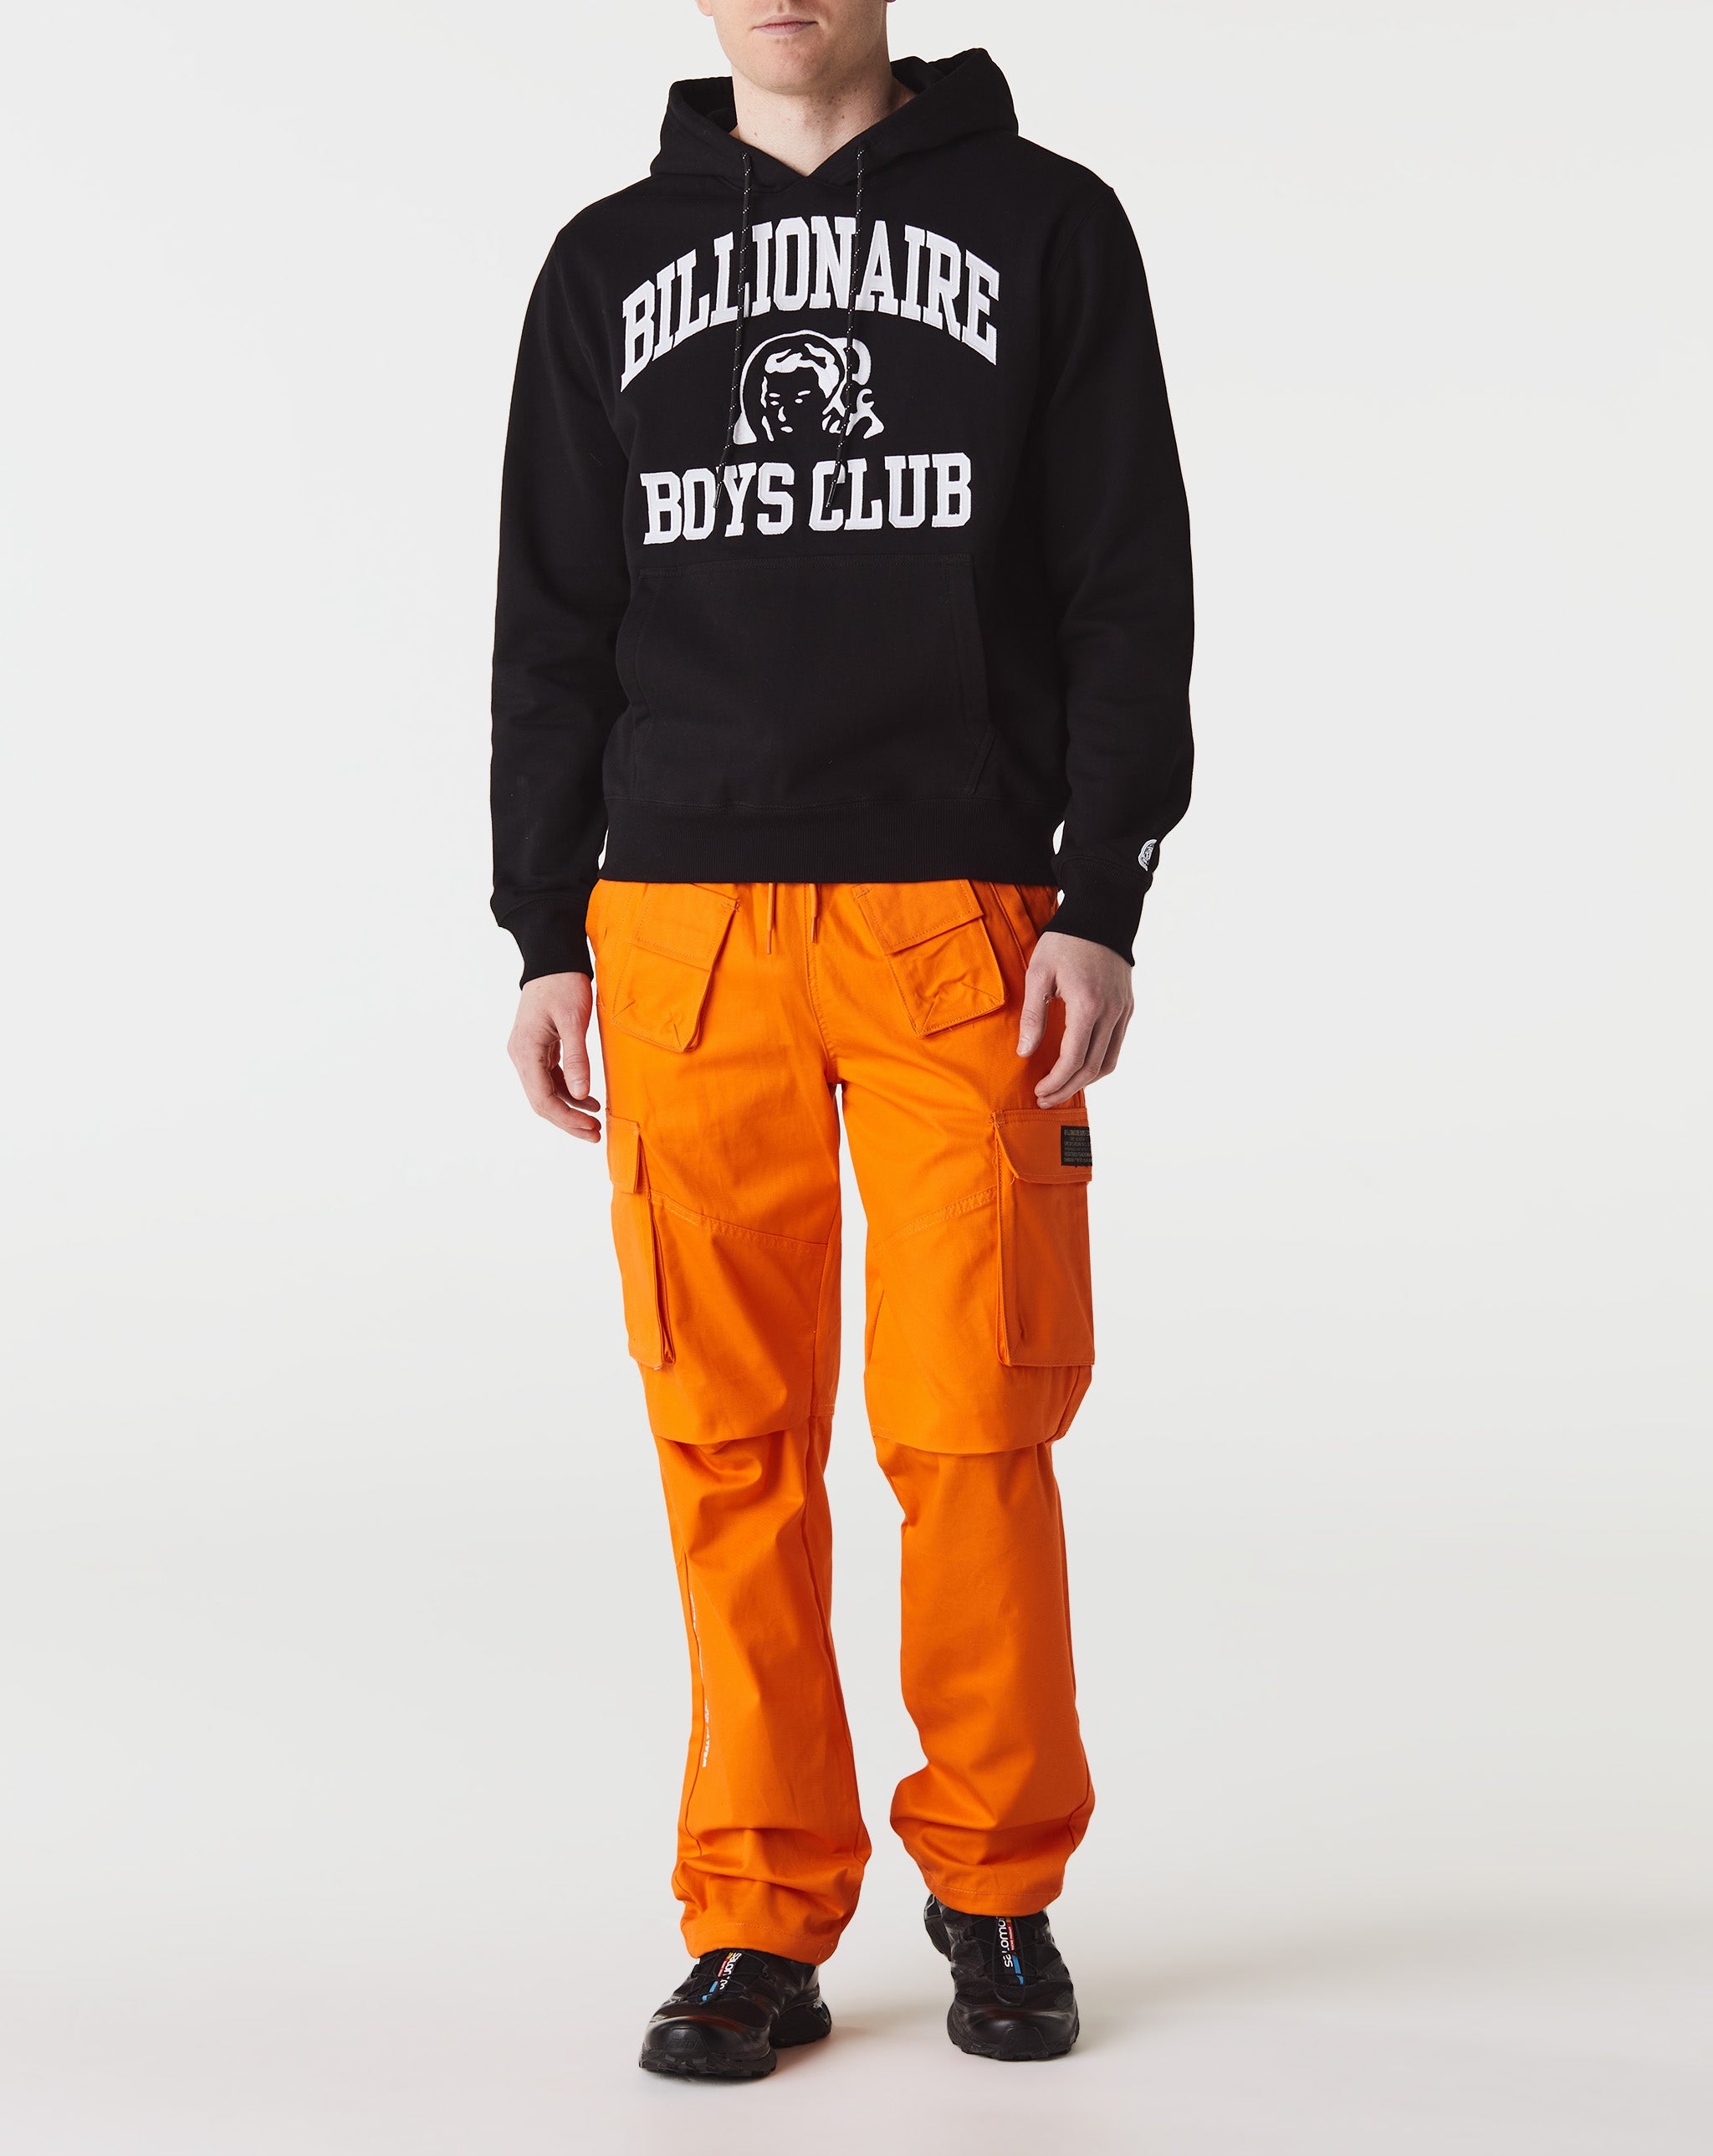 Billionaire Boys Club BB Flagship II Pants - Rule of Next Apparel